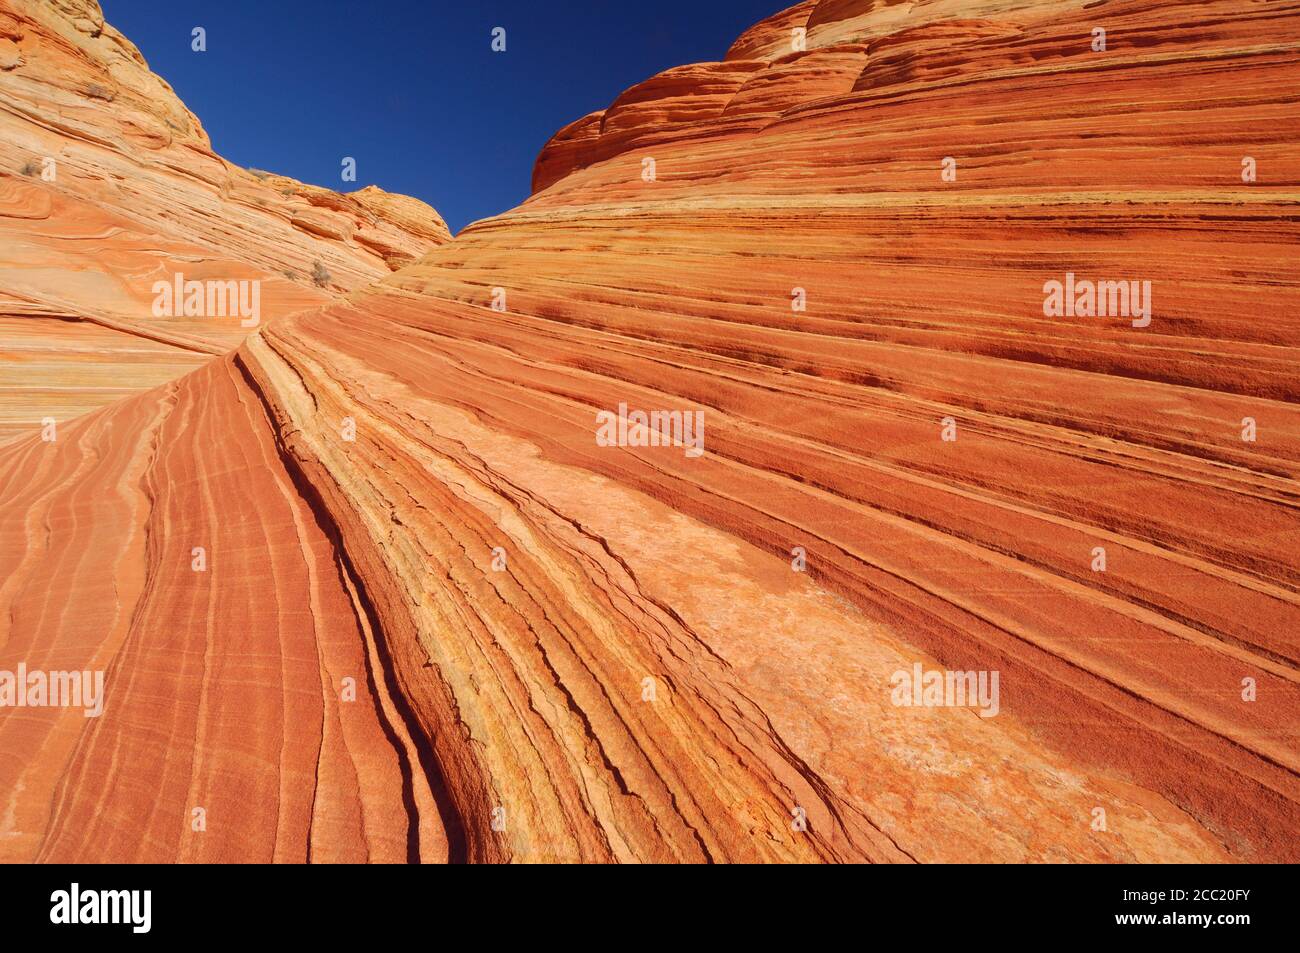 USA, Arizona, Colorado Plateau, Vermilion Cliffs, Sandstone formation Stock Photo